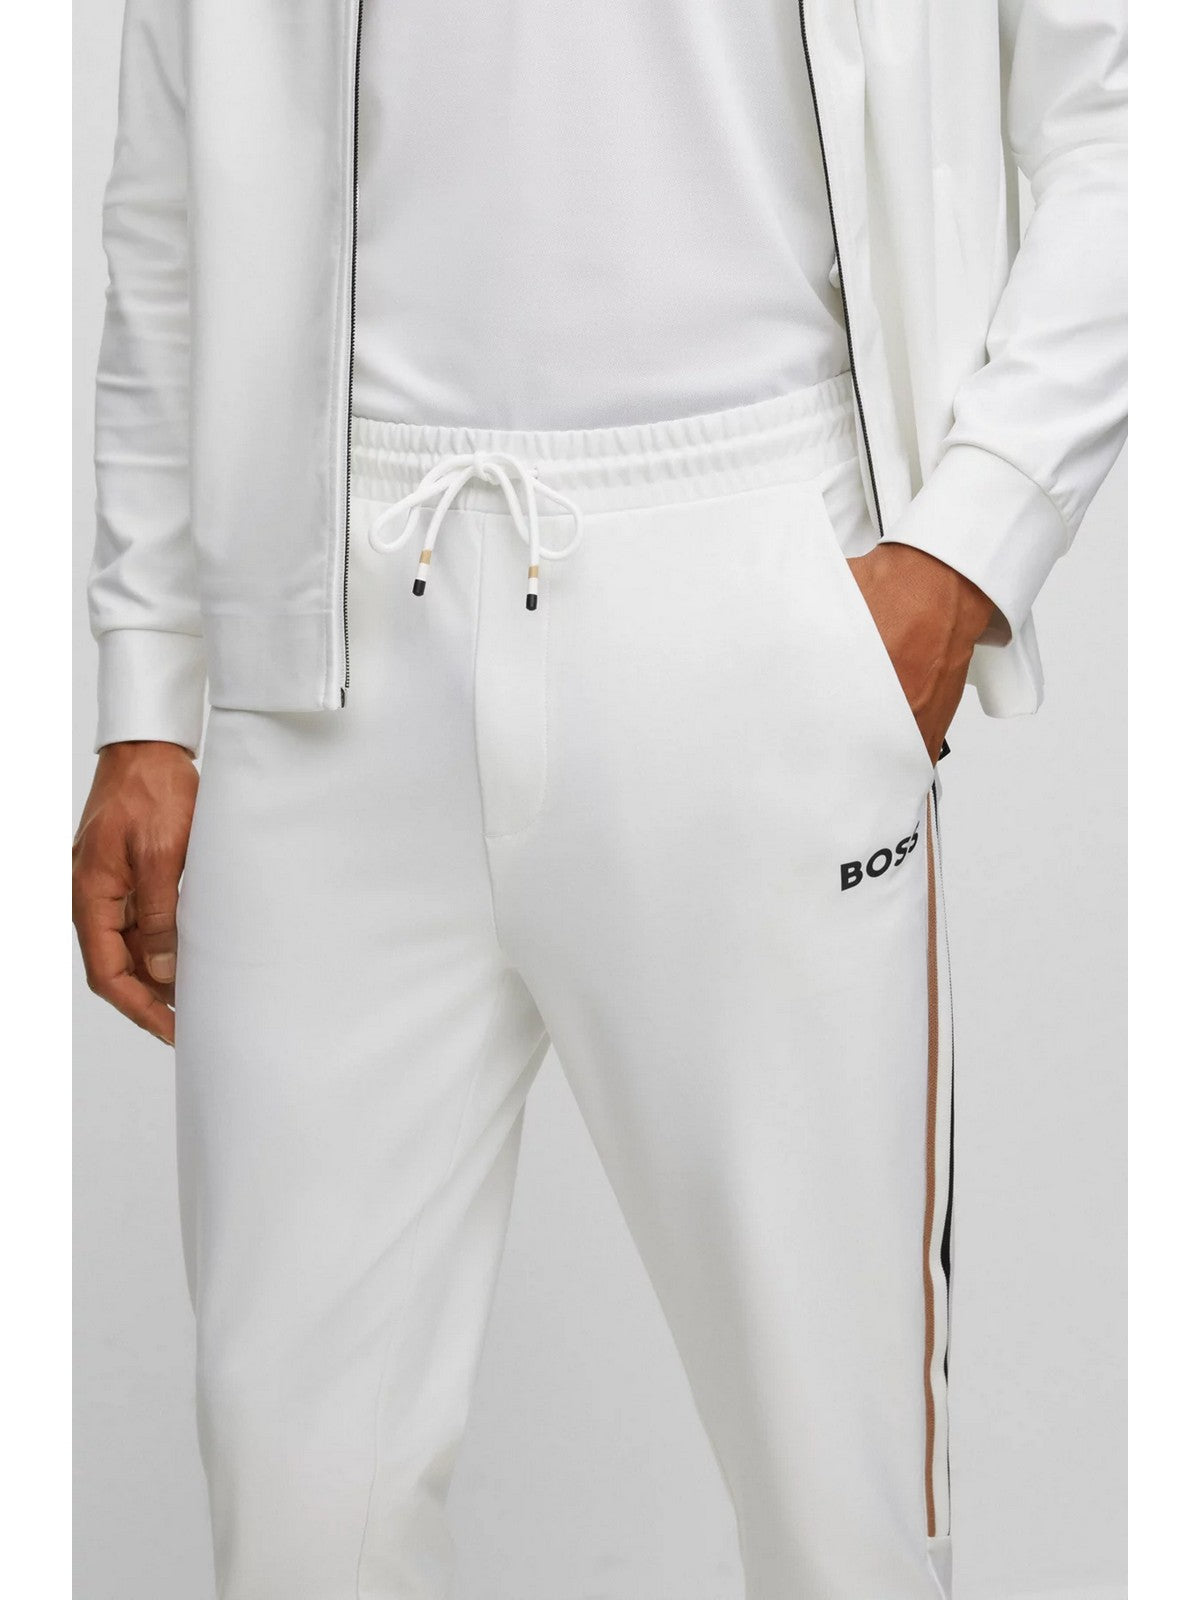 HUGO BOSS Pantalone Uomo  50504553 100 Bianco